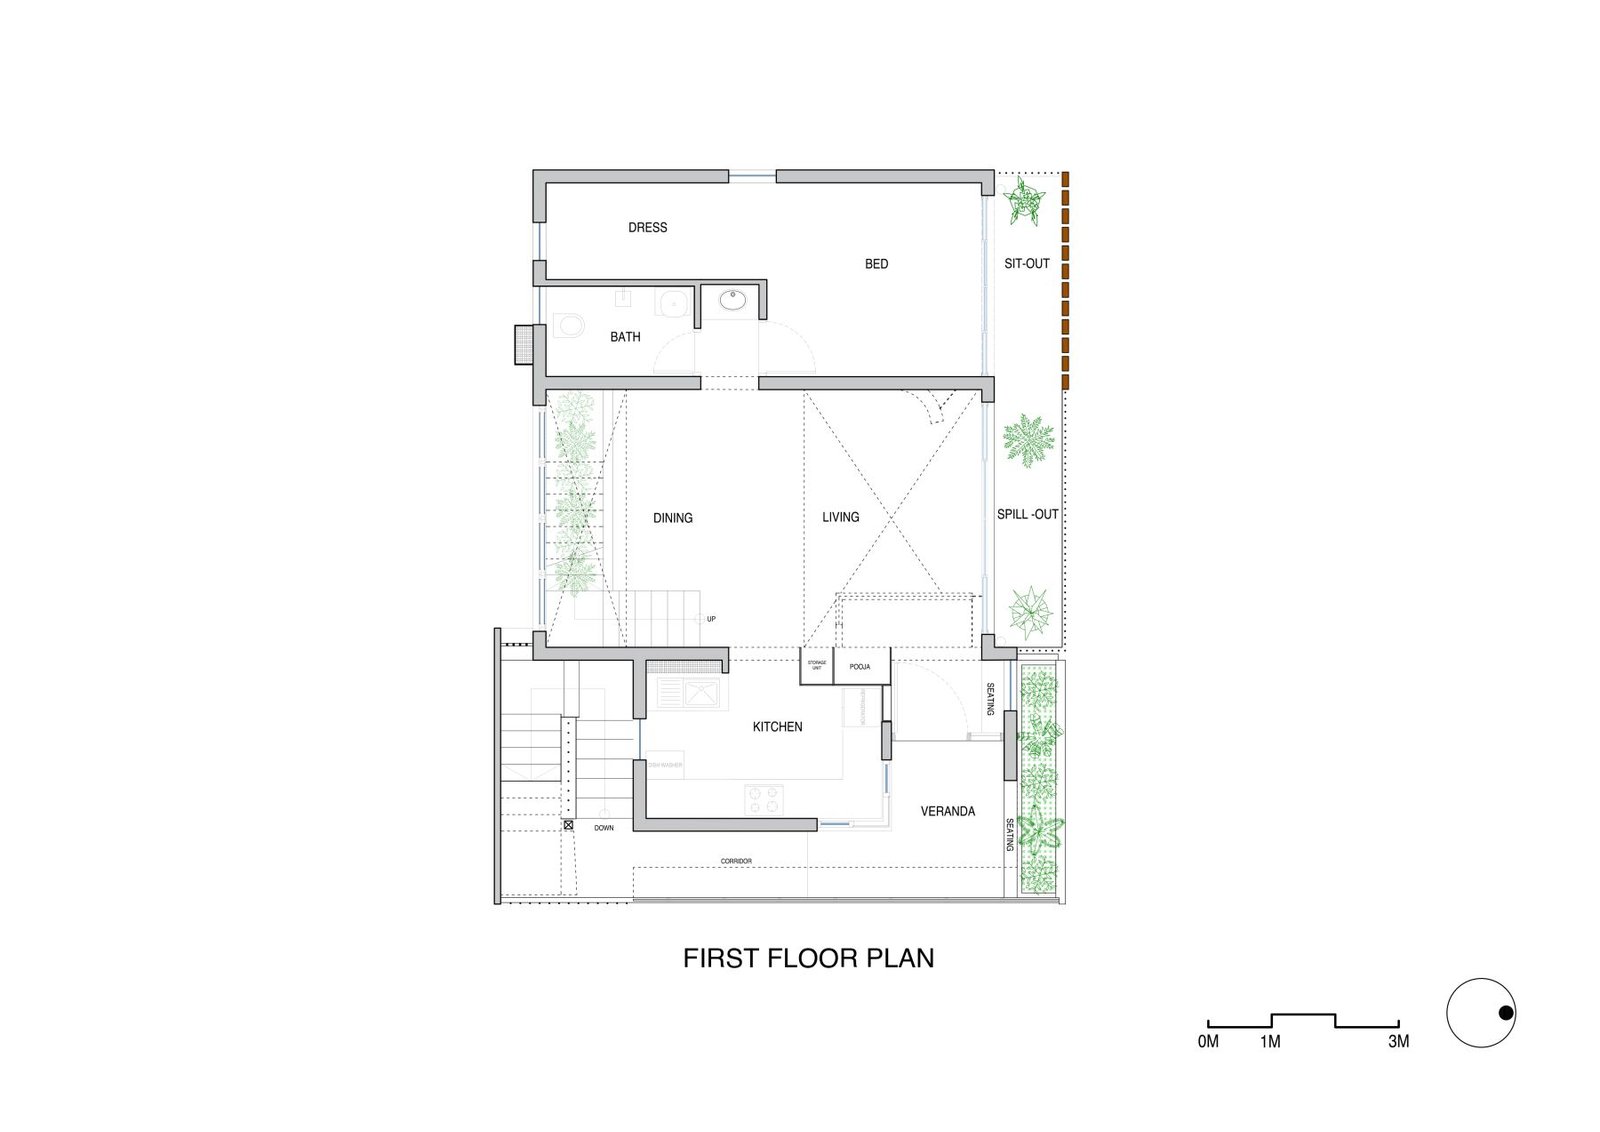 02 First floor plan